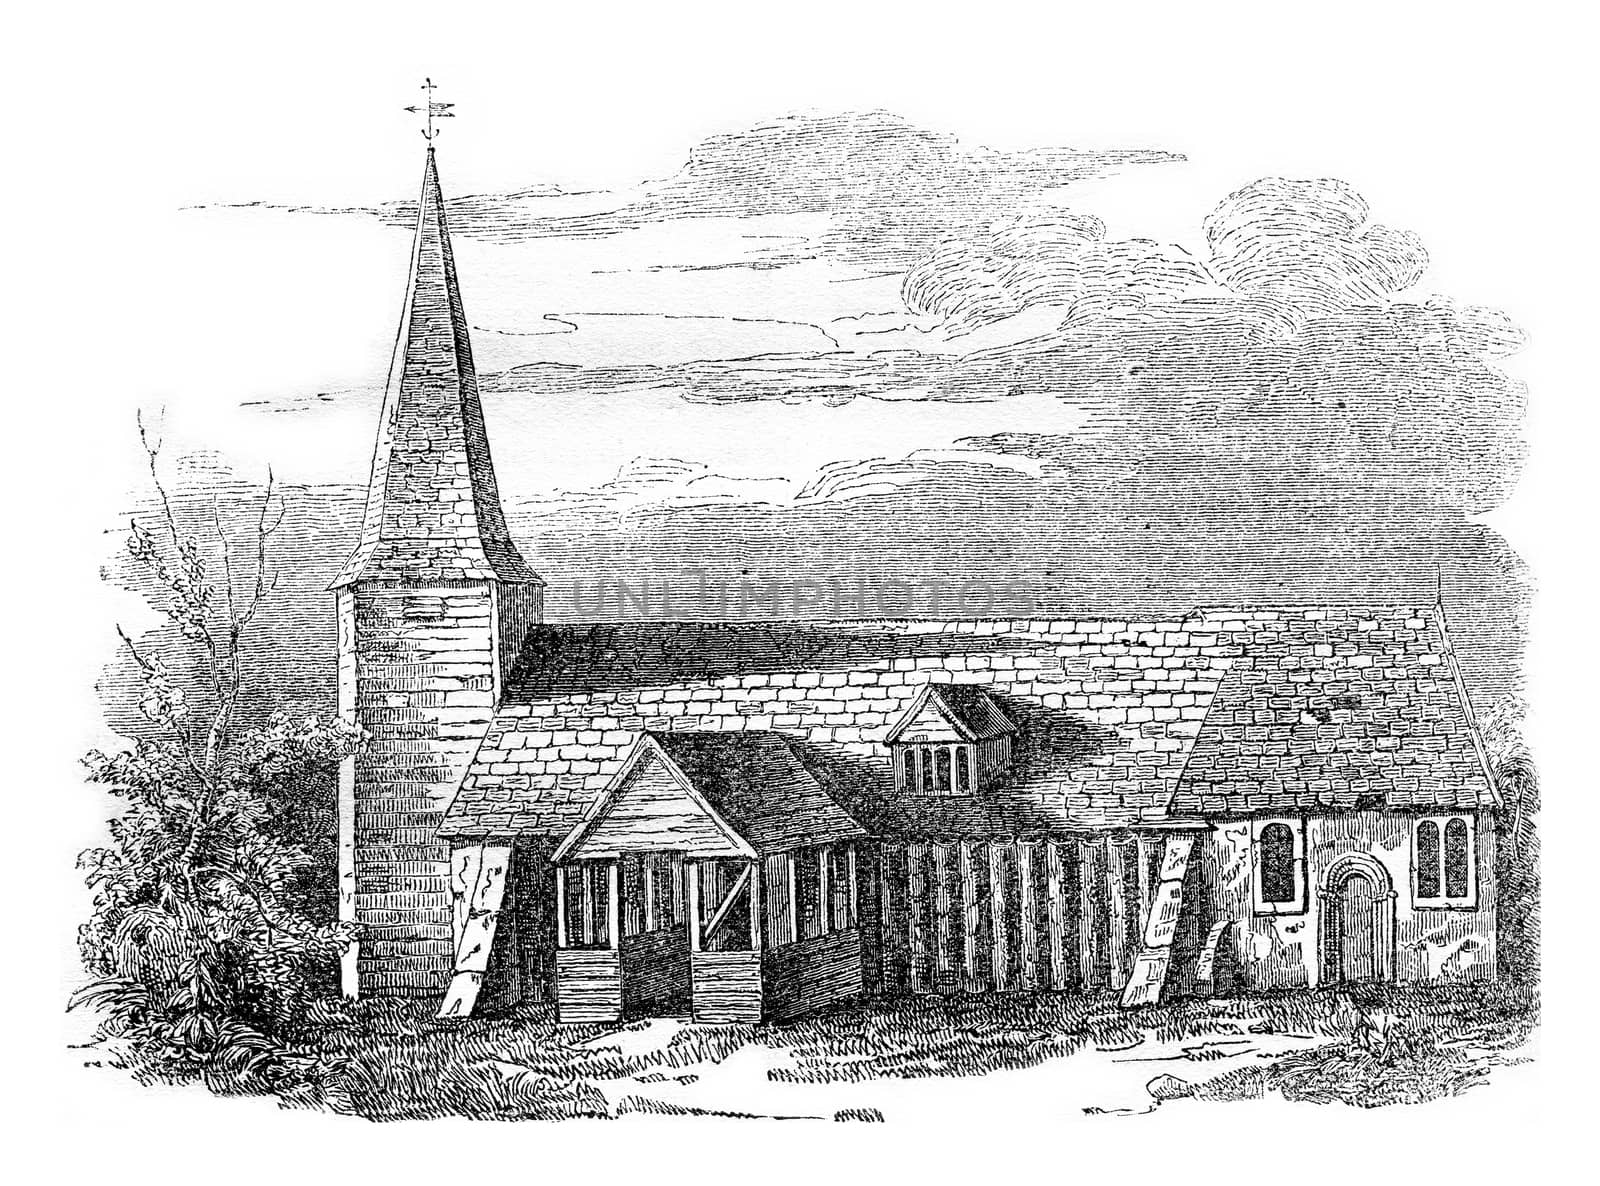 Church of St. Edmundsbury (Essex), vintage engraved illustration. Colorful History of England, 1837.
